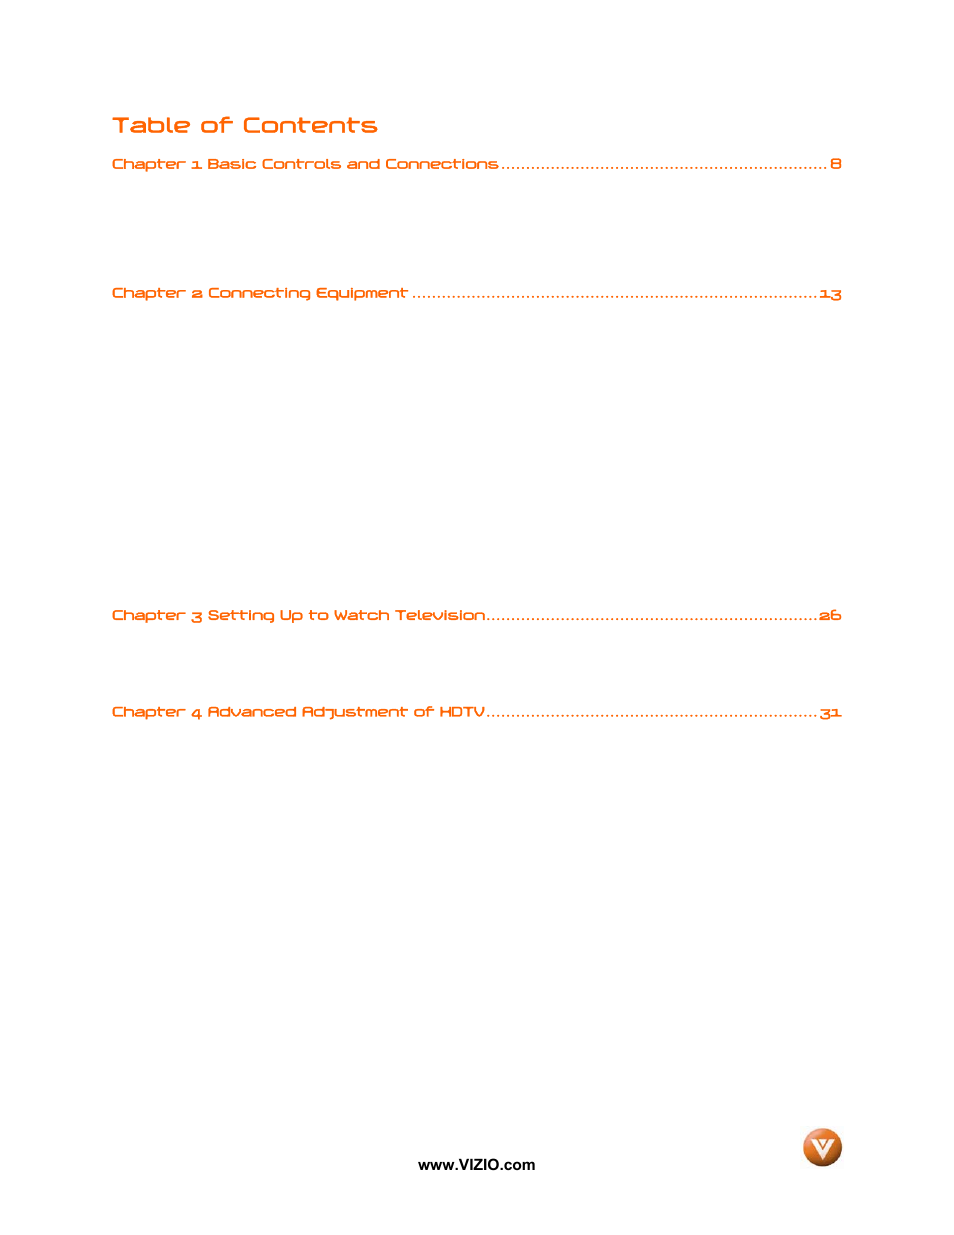 Vizio VP42 User Manual | Page 6 / 57